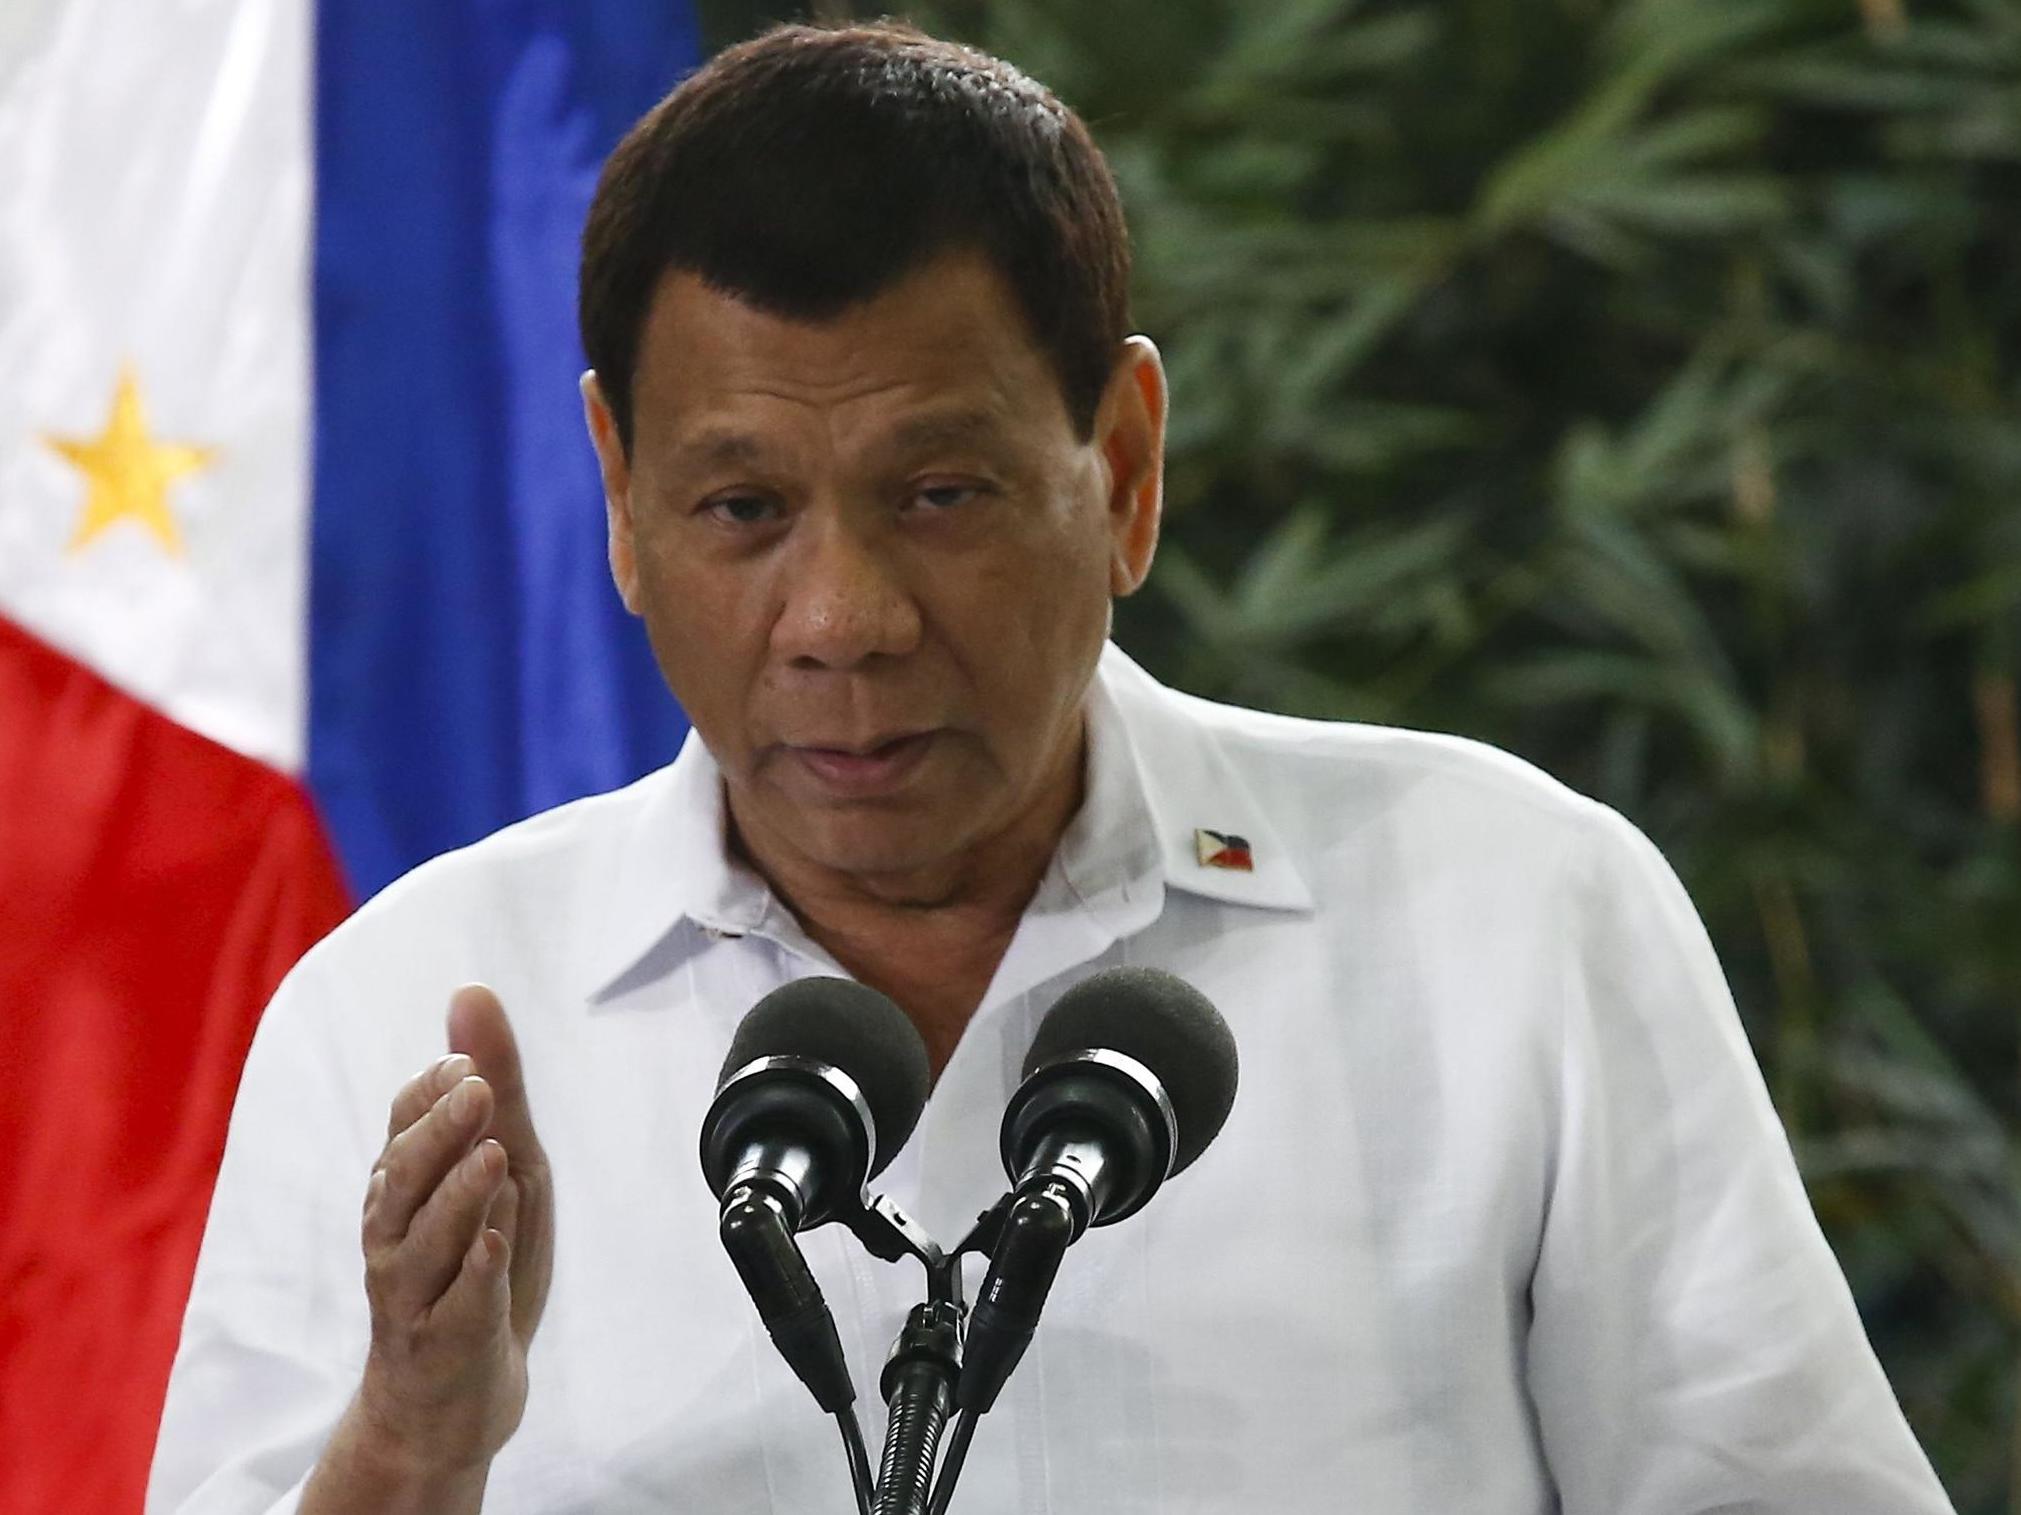 Duterte's spokesman